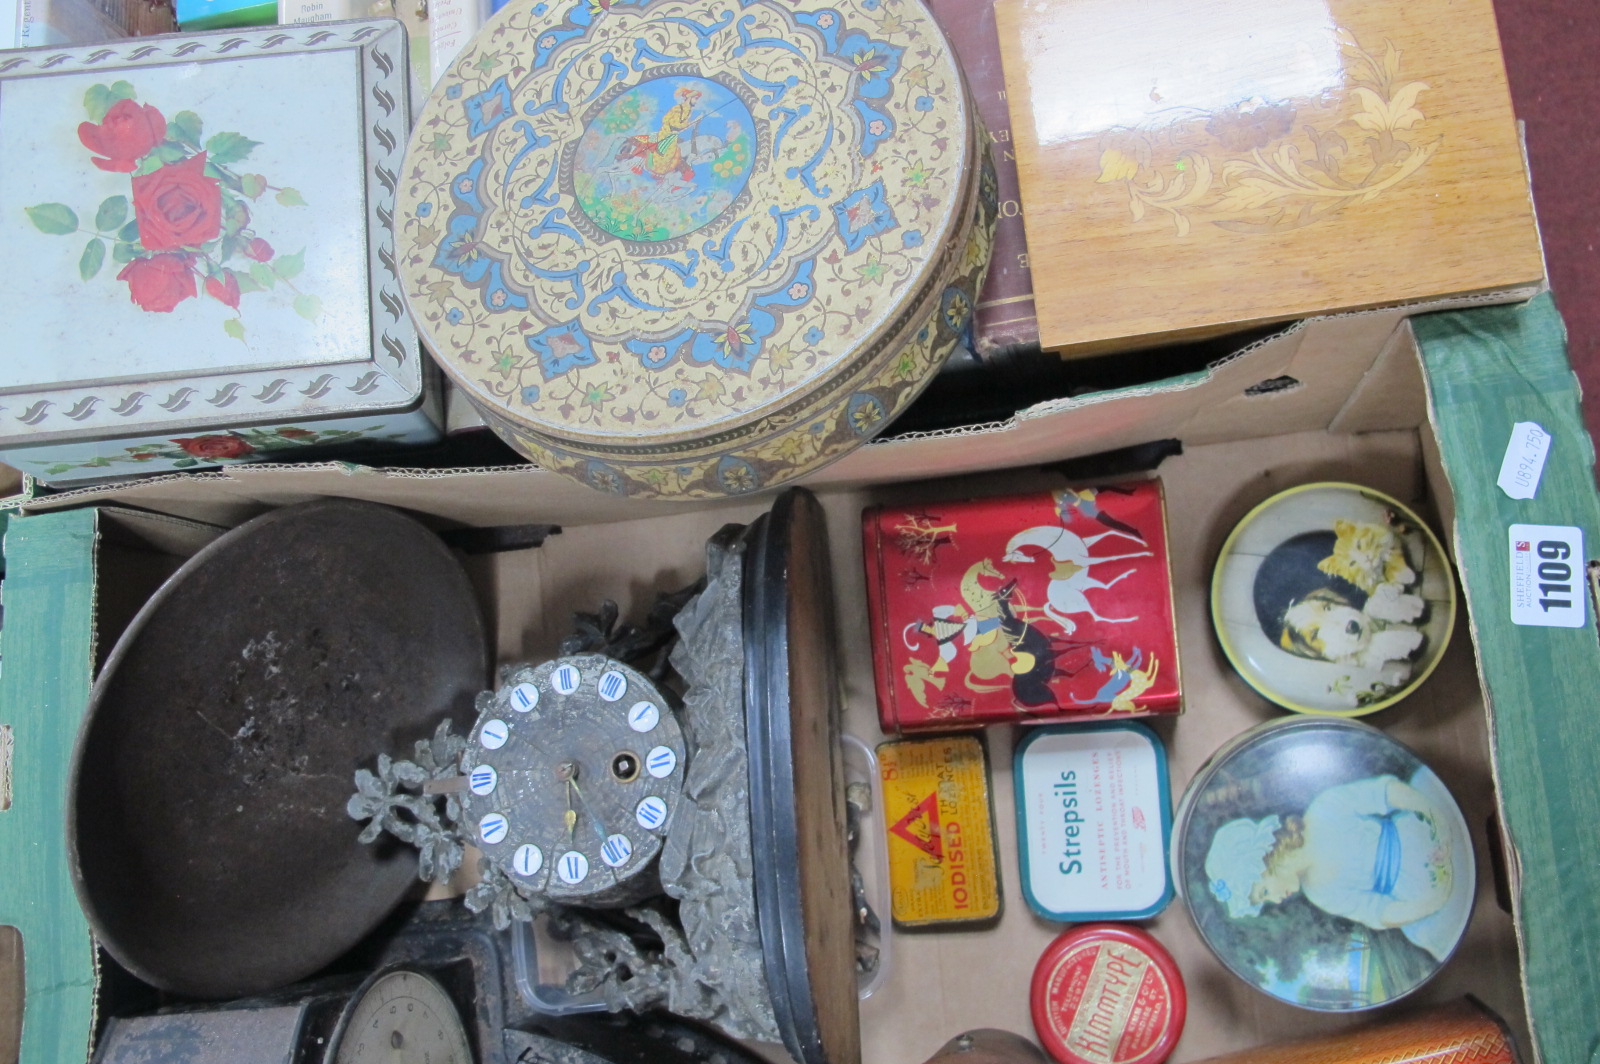 A XIX Century Mantle Clock tins, binoculars, scales, flat iron:- One Box.